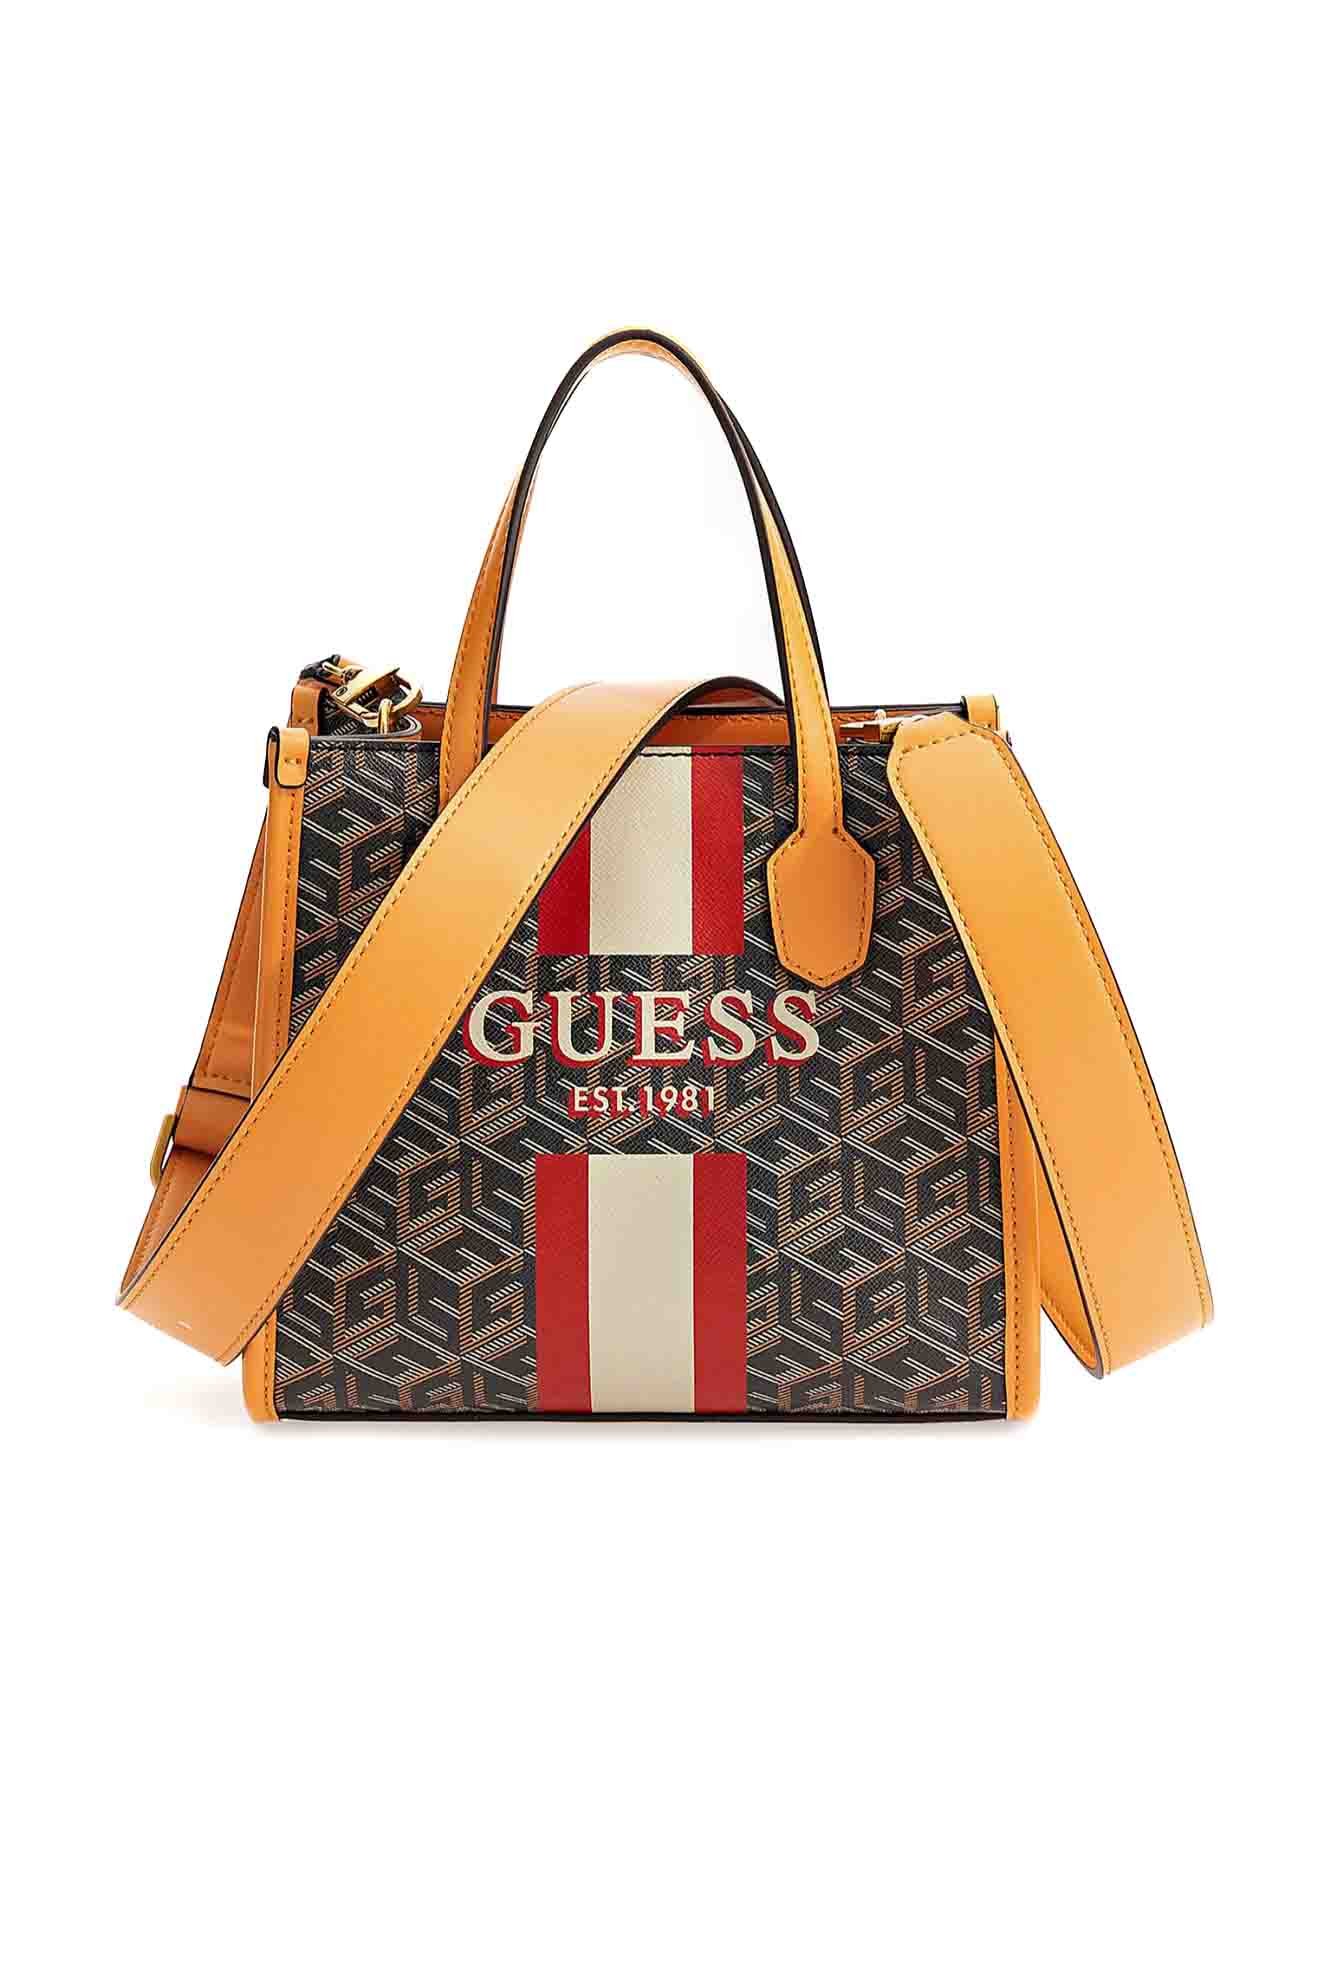 Red Leopard Print Guess Purse | Guess purses, Red leopard, Purses